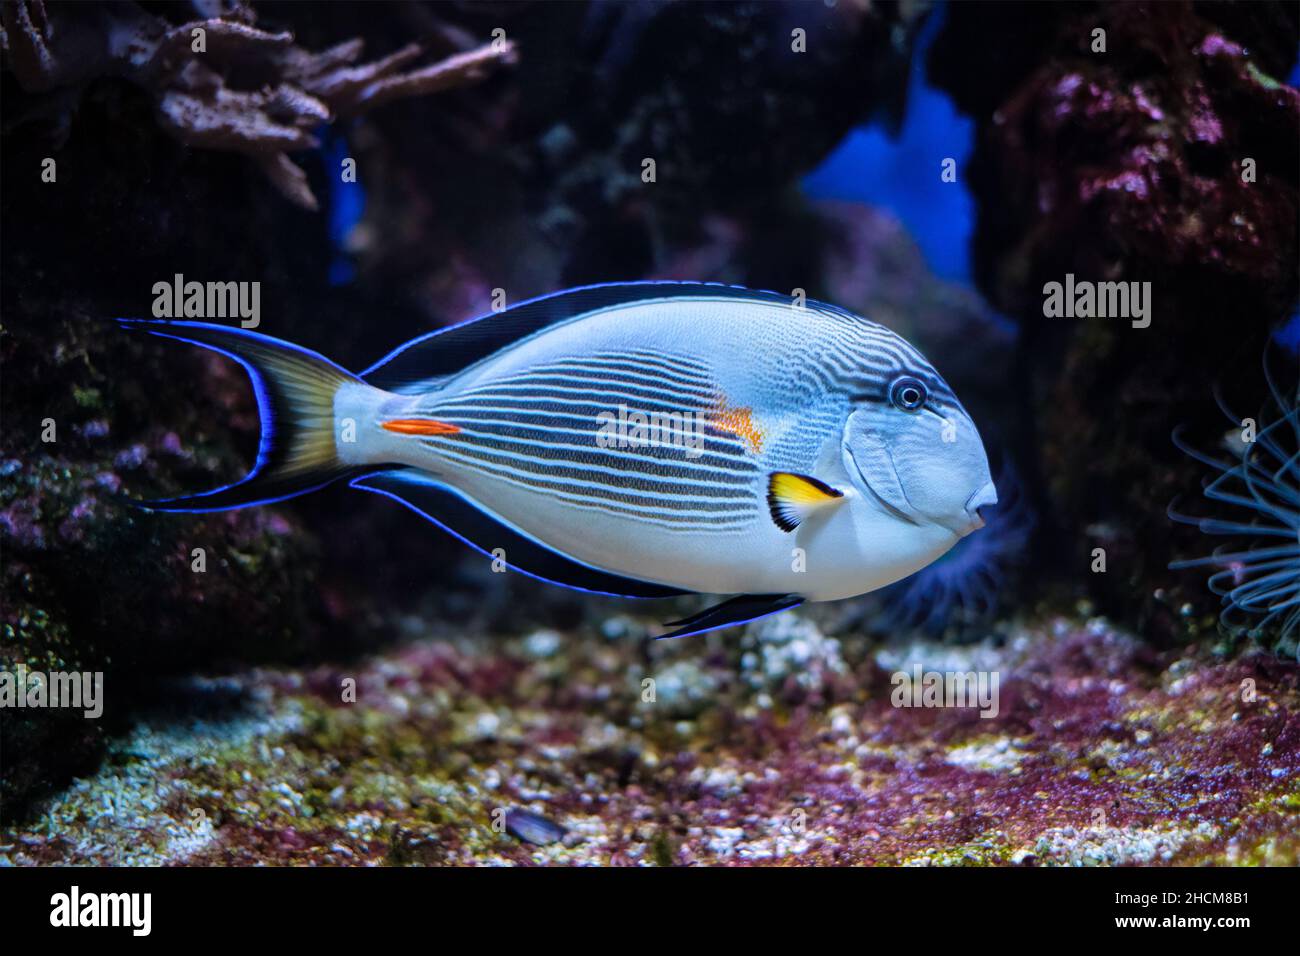 Sohal Surgeonfish sott'acqua Foto Stock